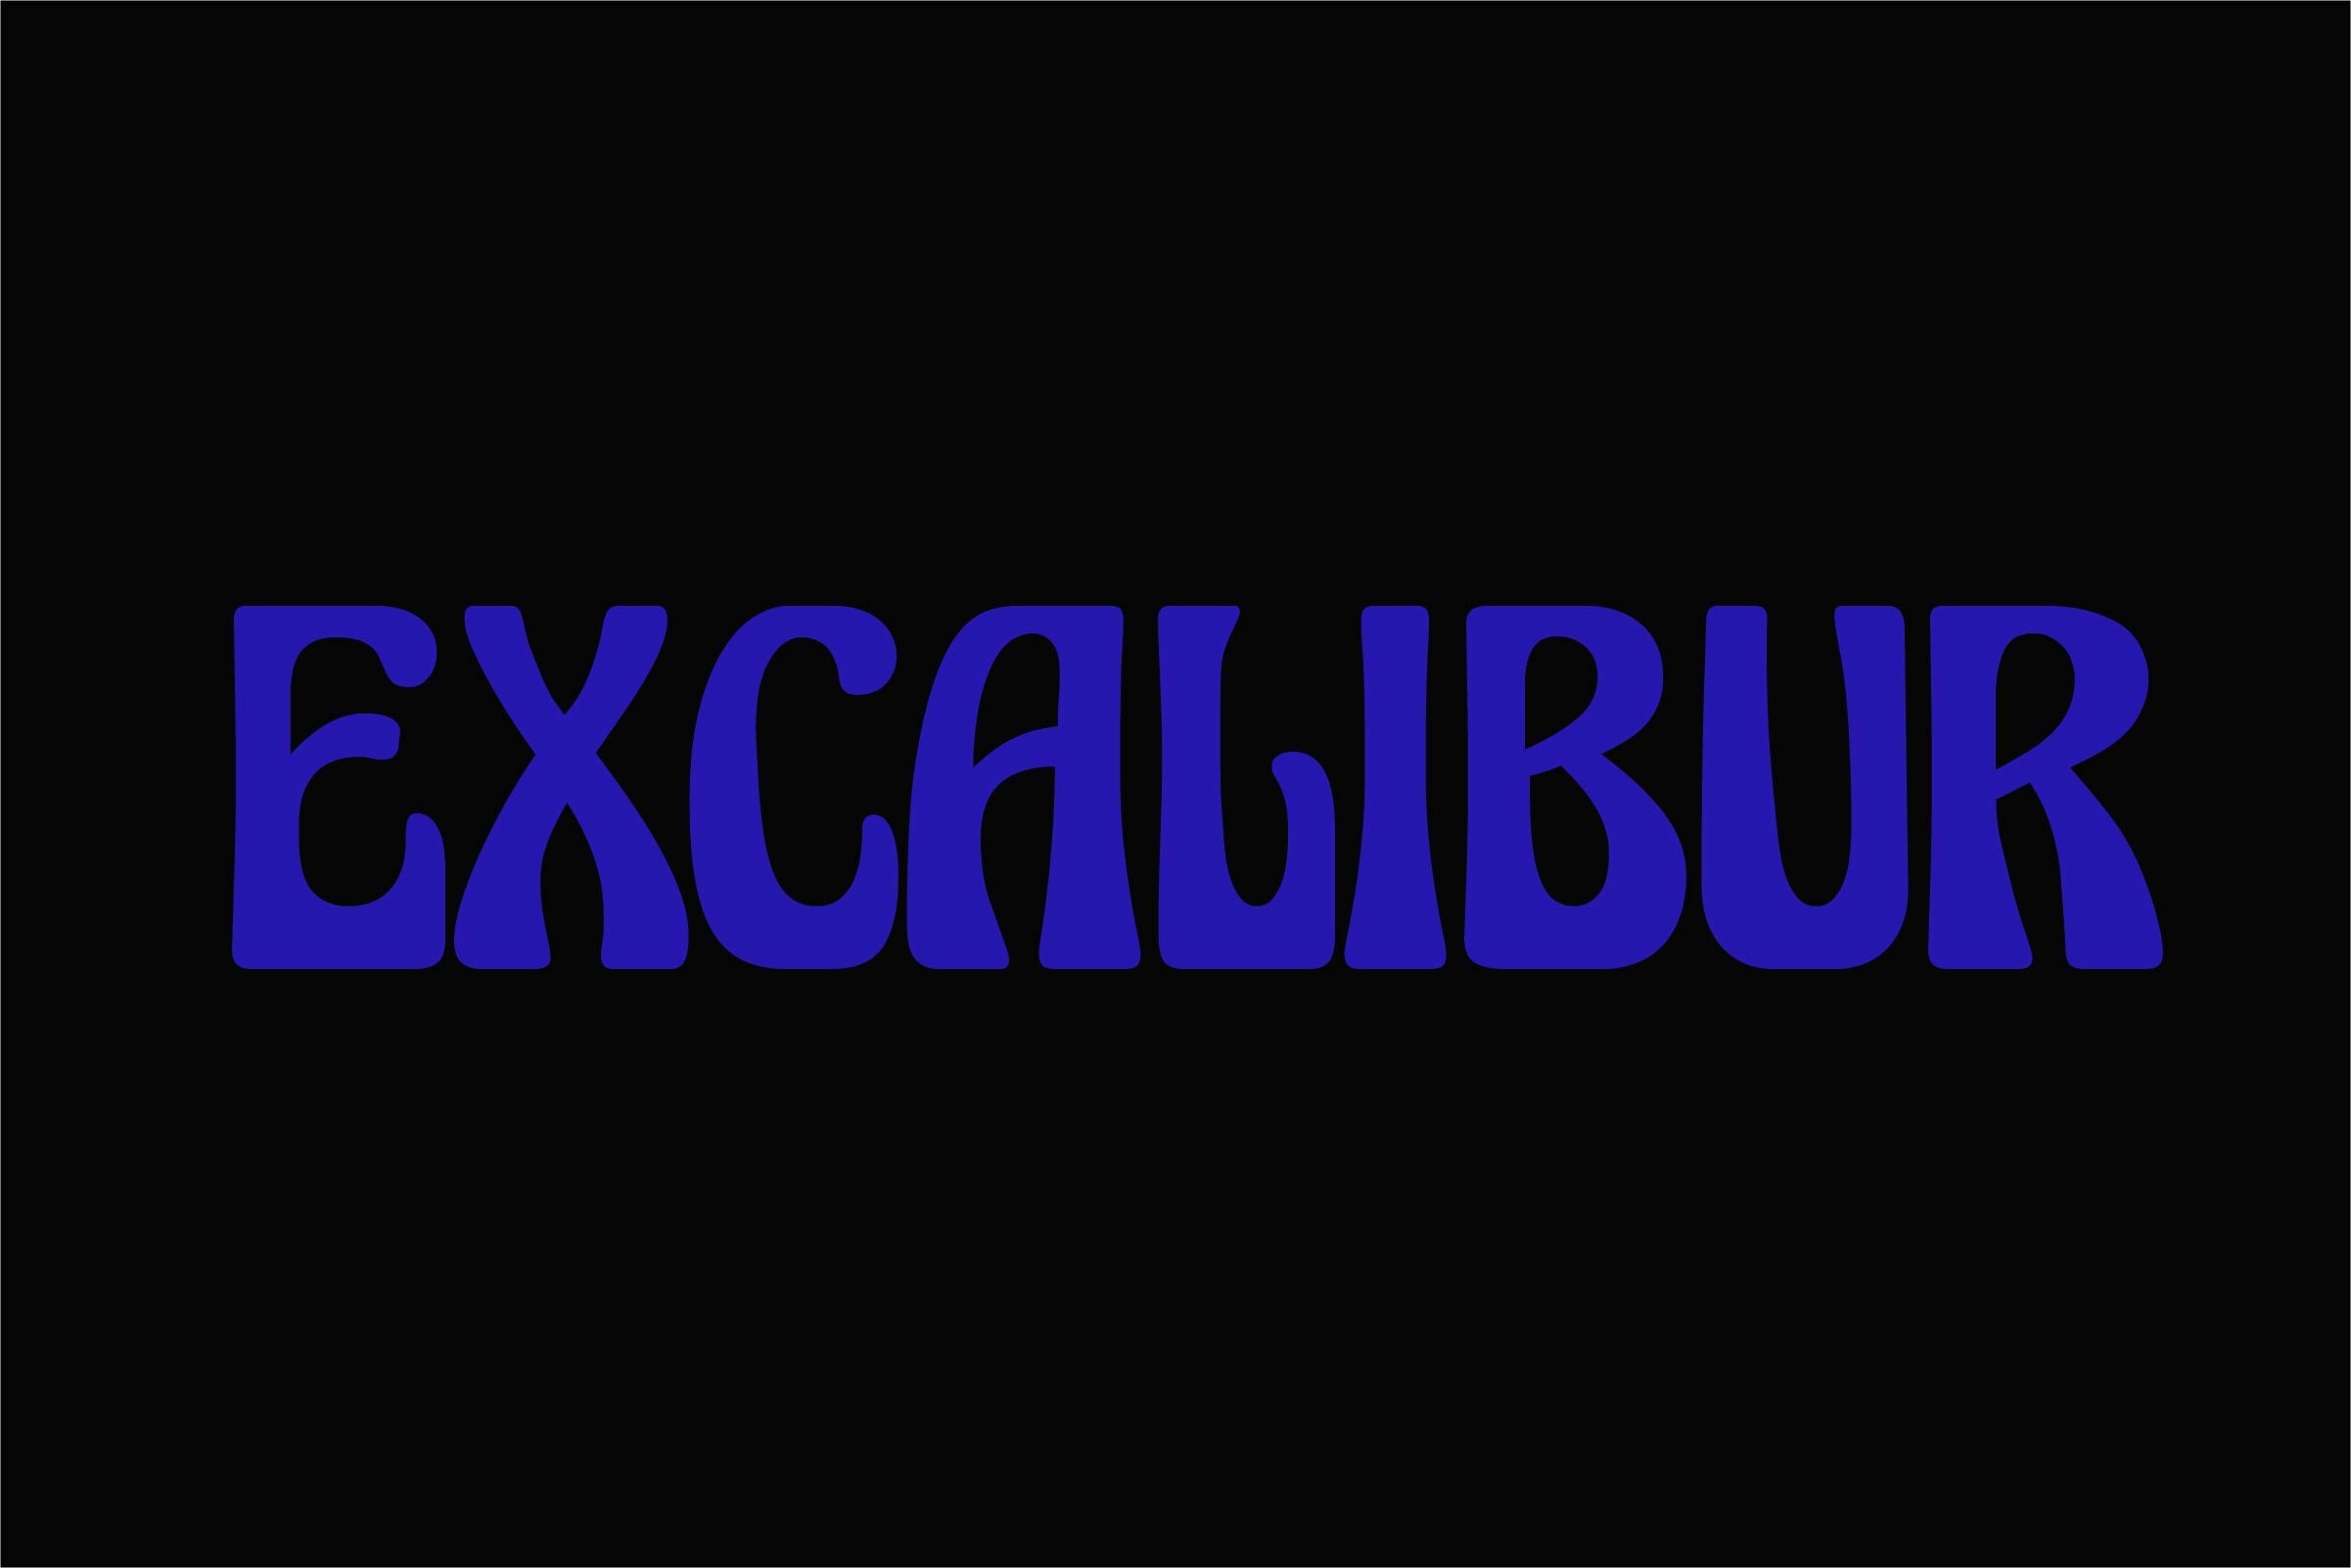 Police Excalibur